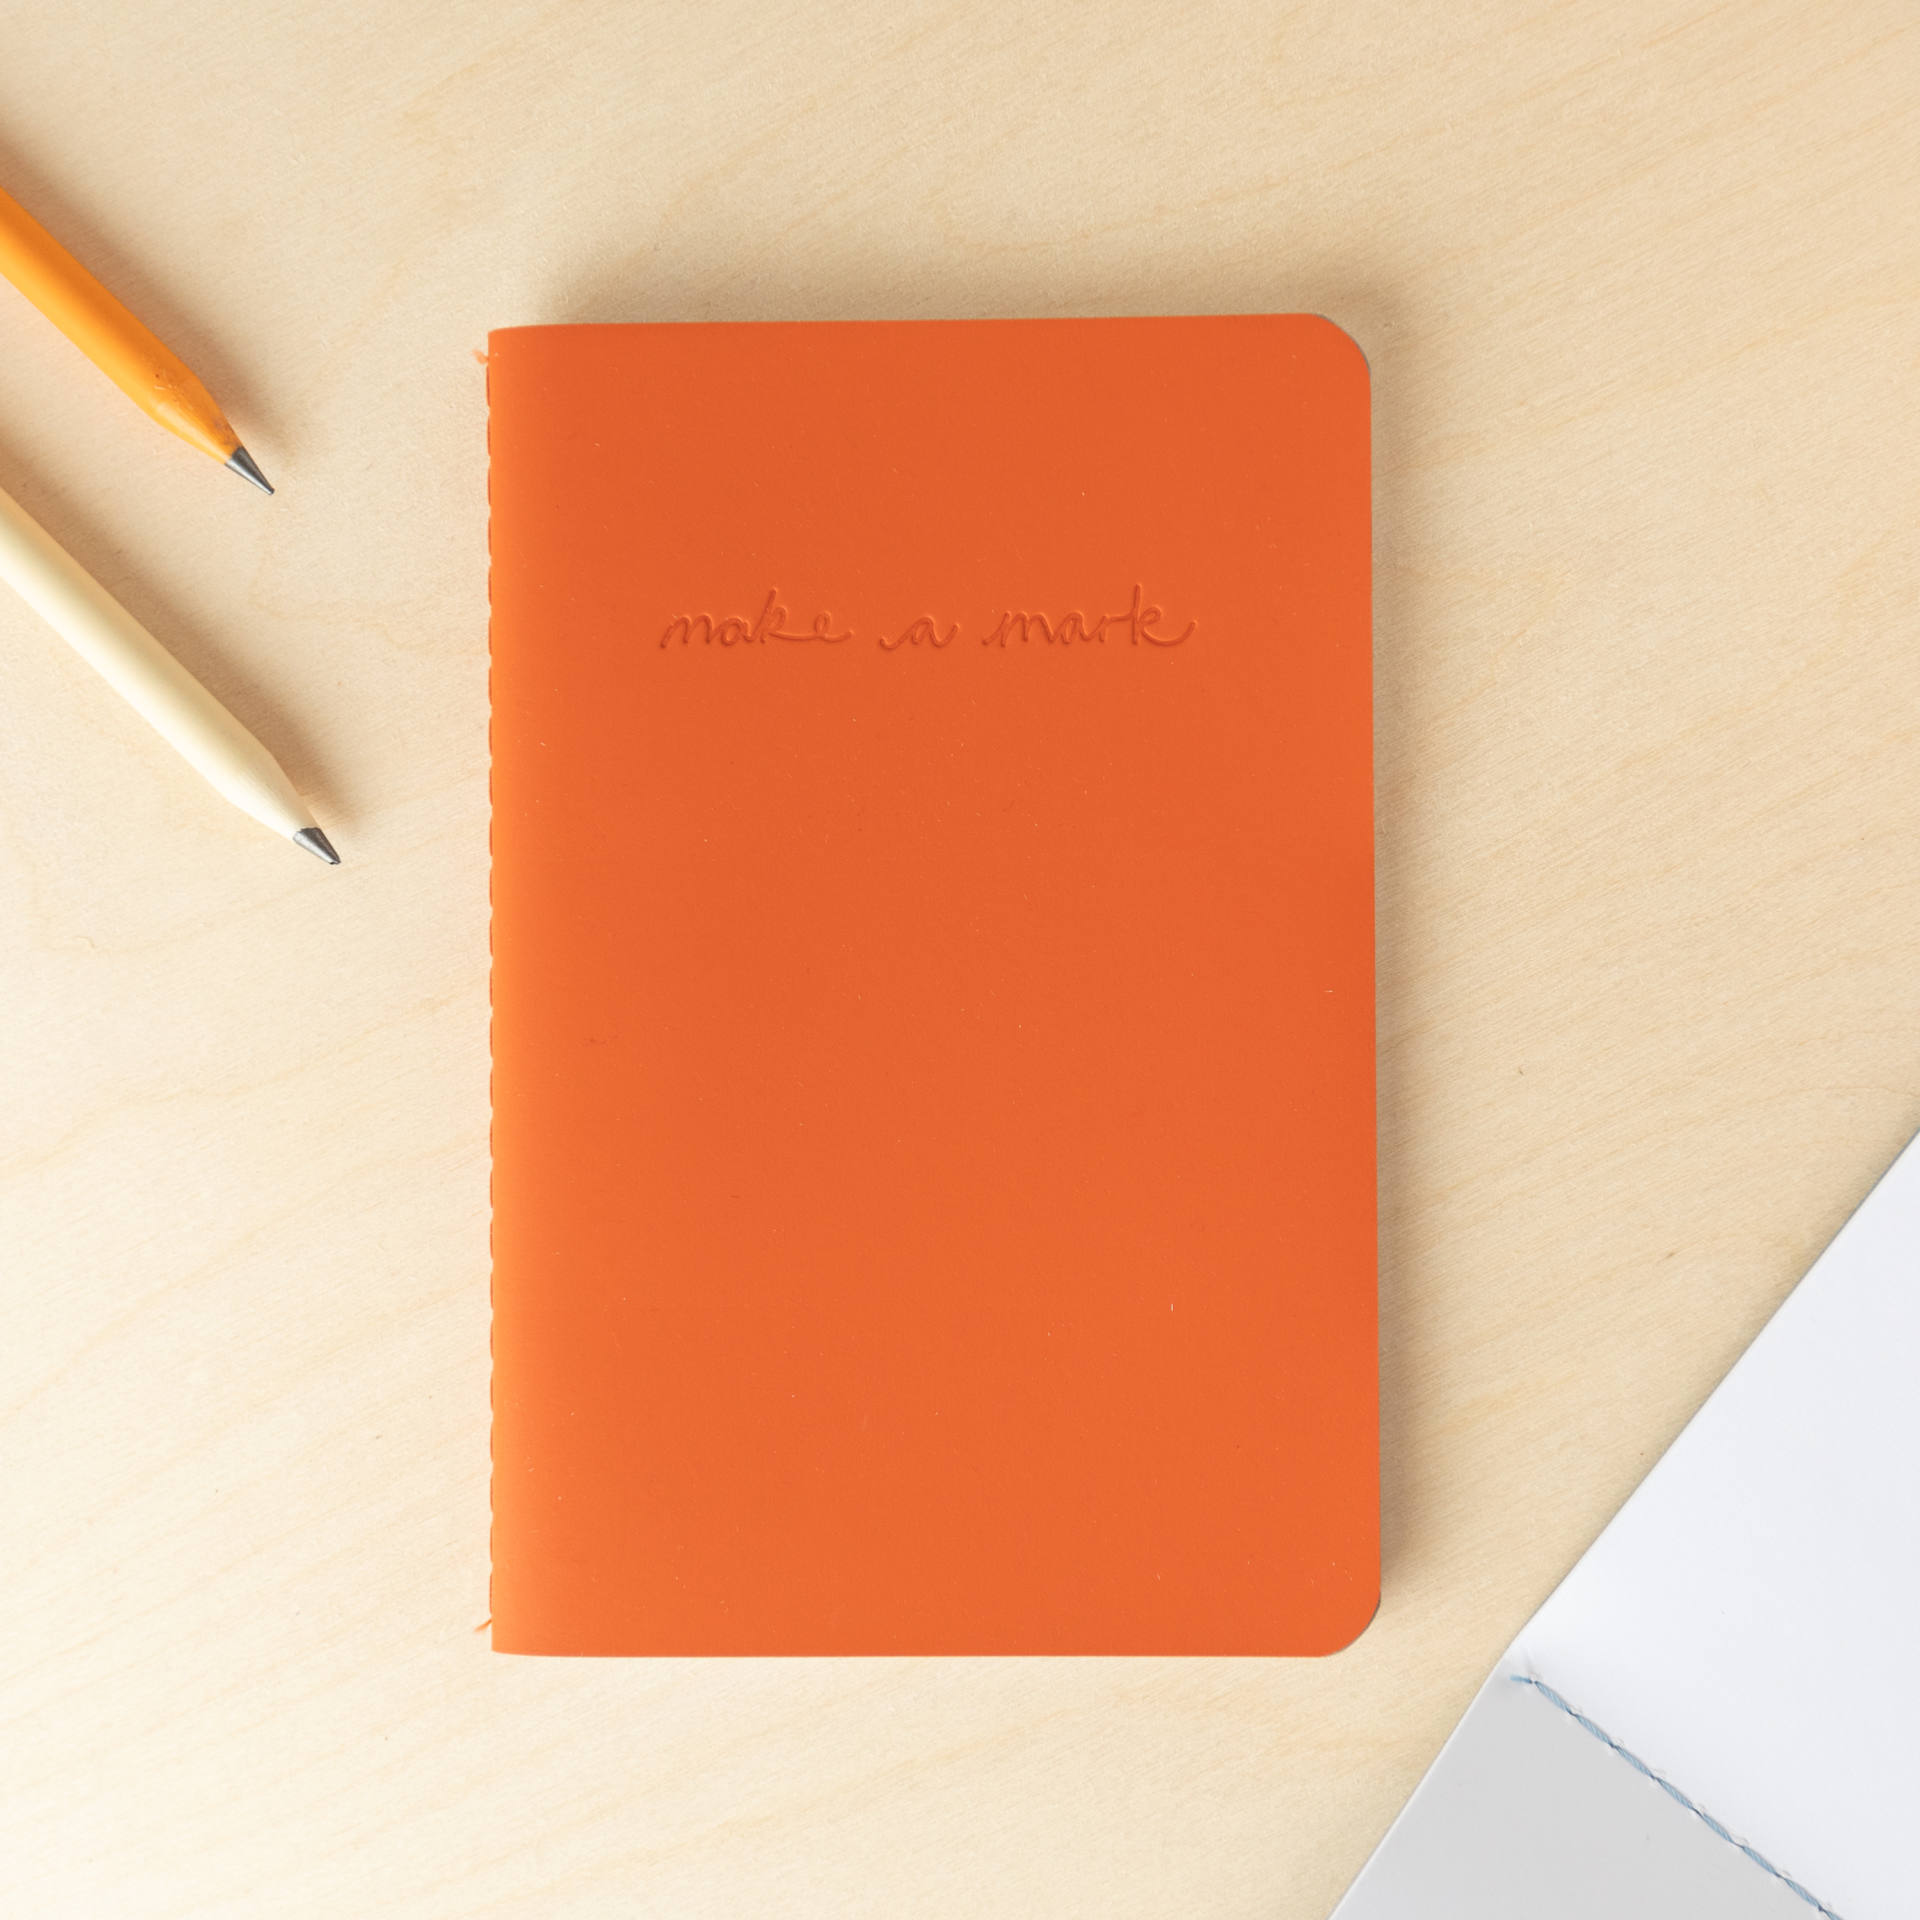 Recycled Leather Pocket Notebook Journal - Burnt Orange